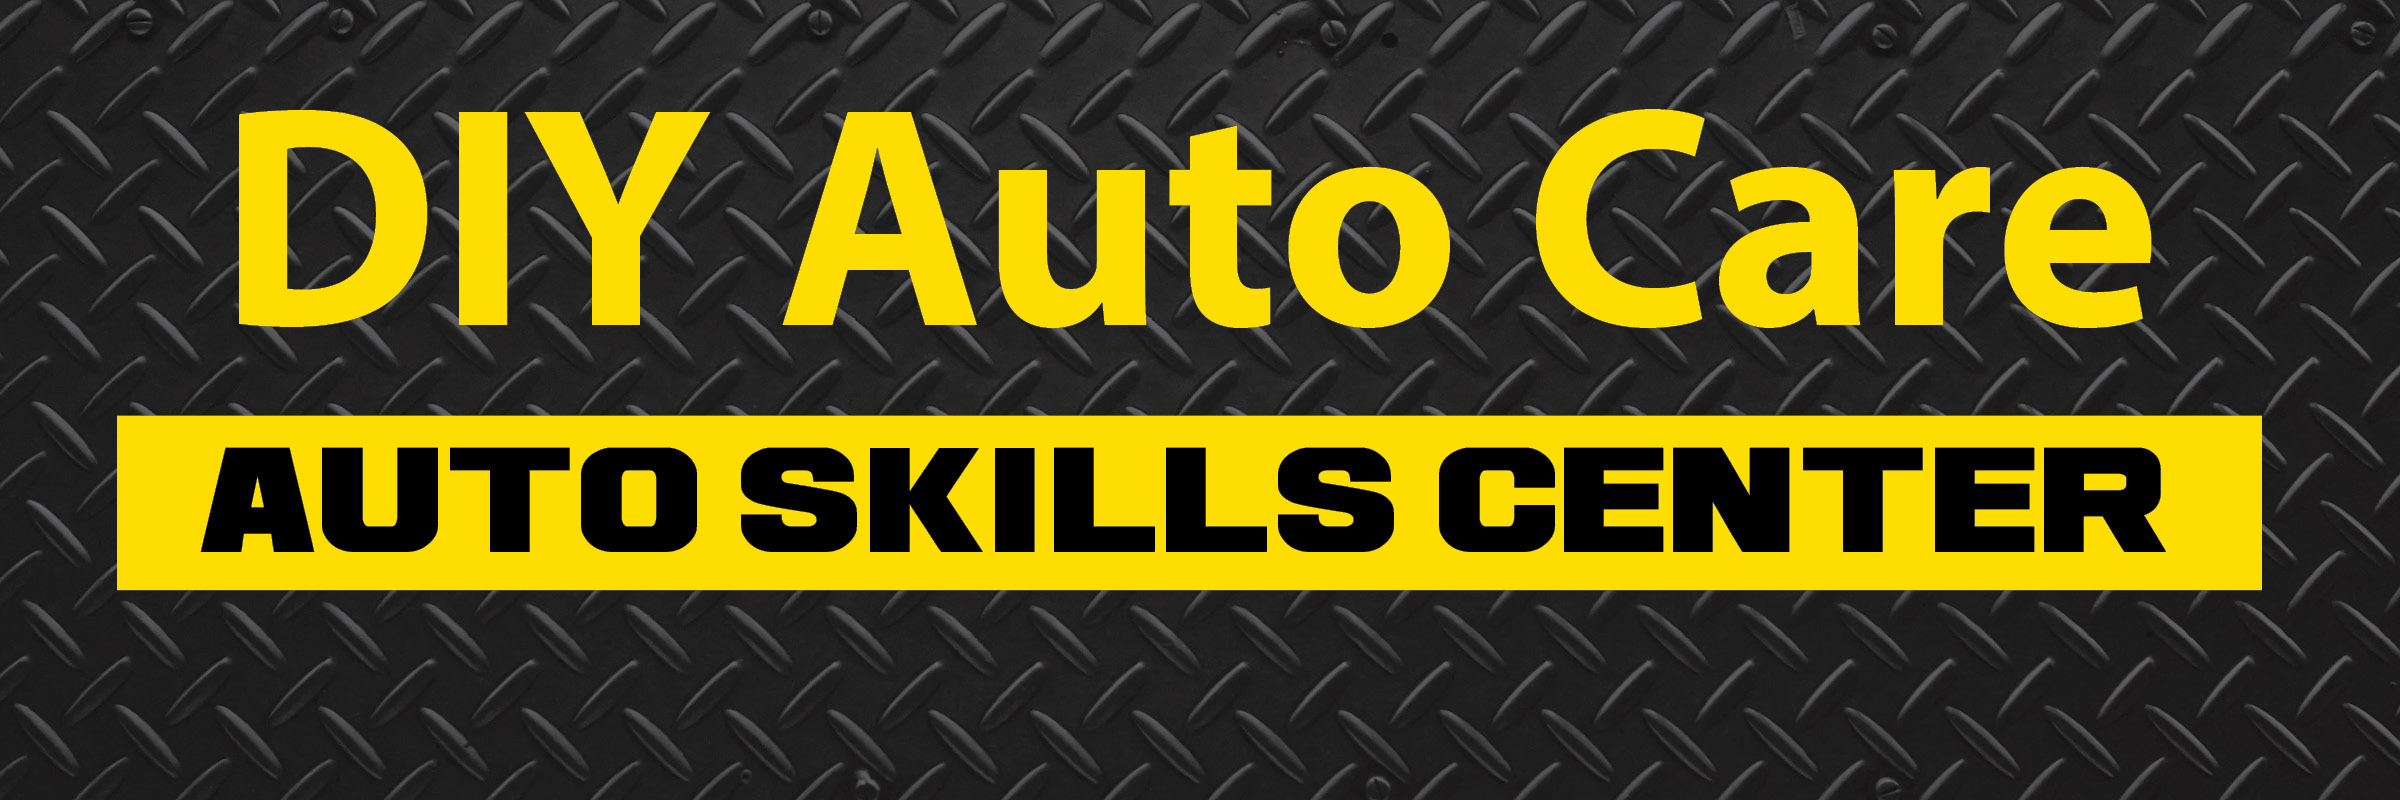 Visit the Auto Skills Center